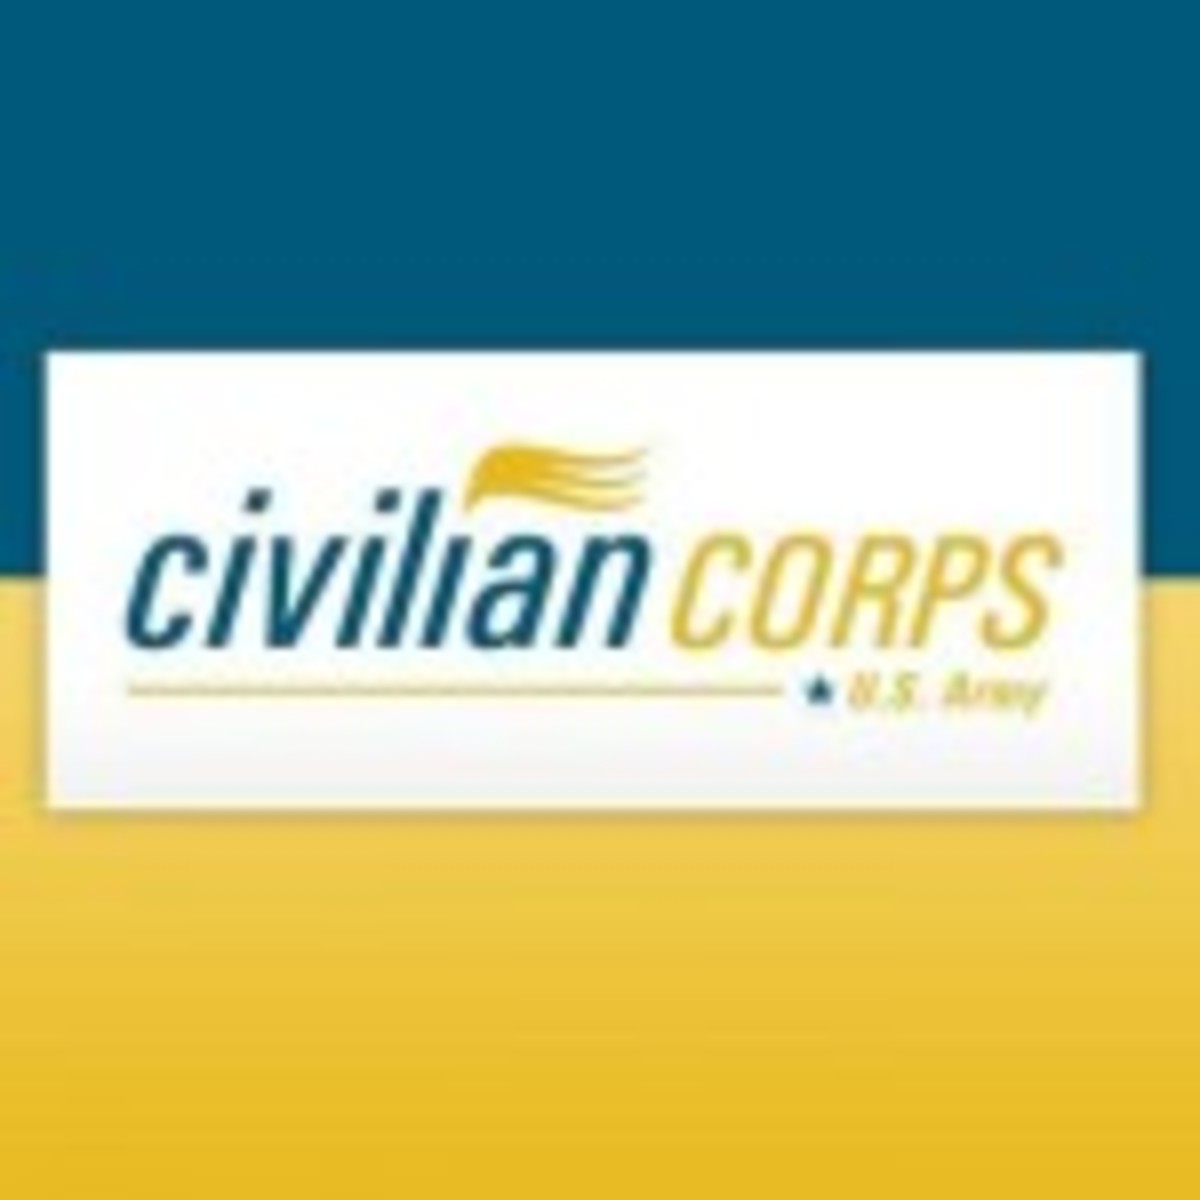 Civilian Corps